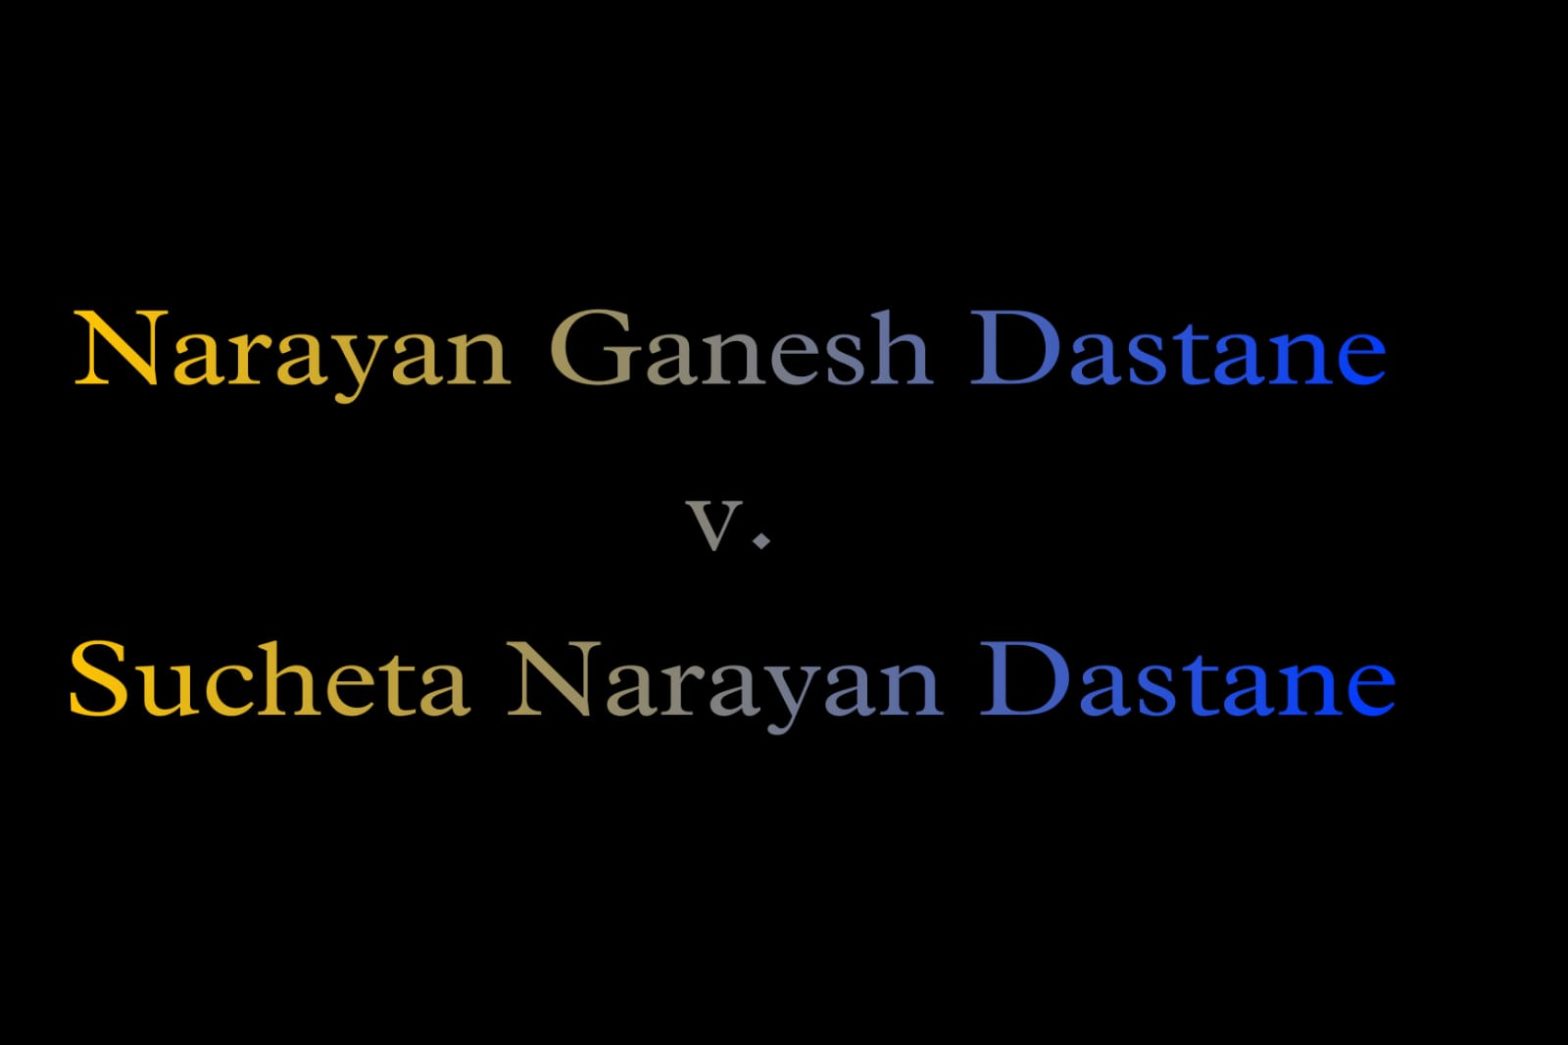 Narayan Ganesh Dastane vs. Sucheta Narayan Dastane